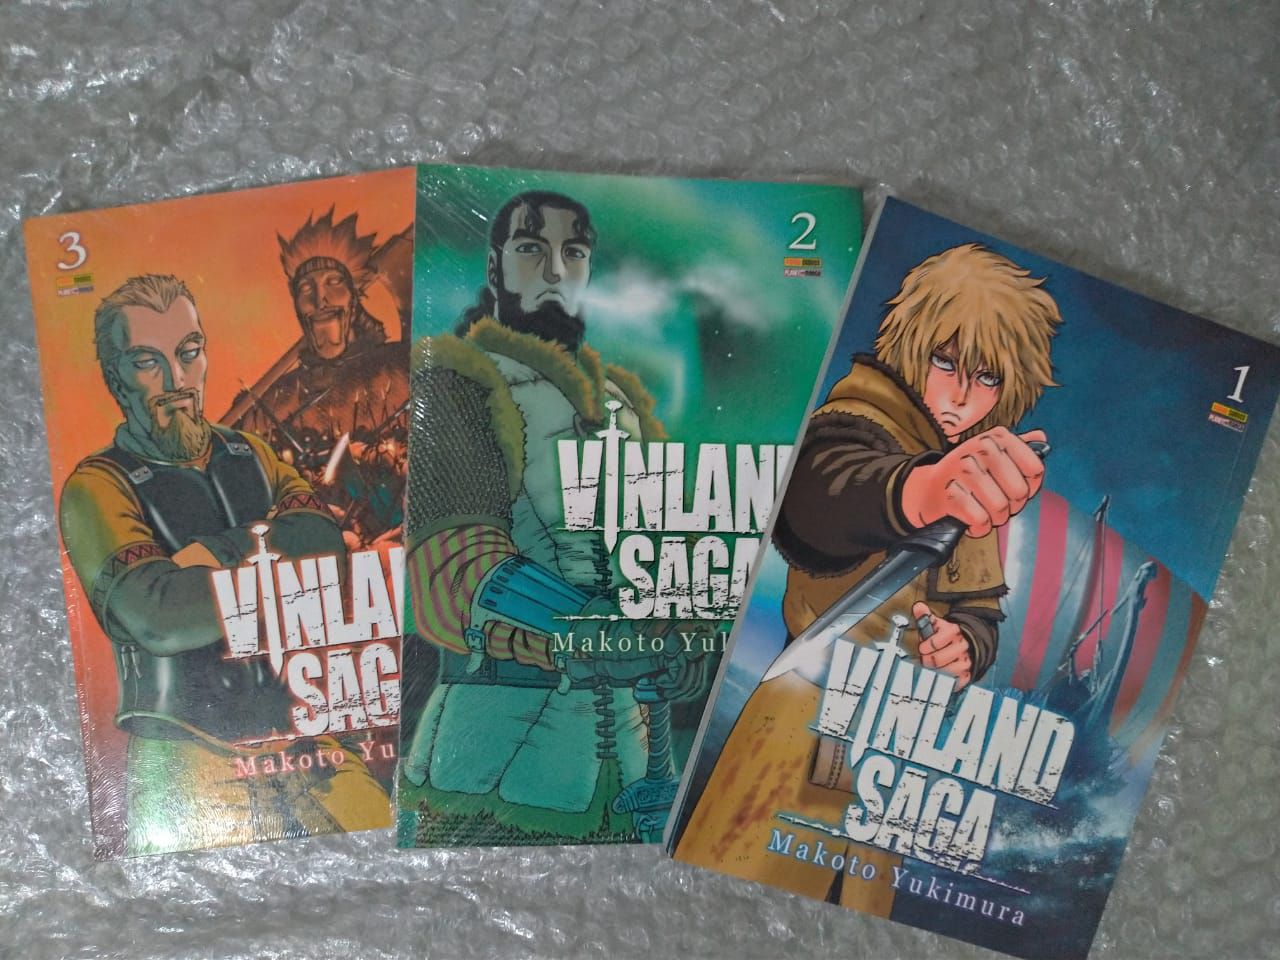 Vinland Saga 2 by Makoto Yukimura, Hardcover